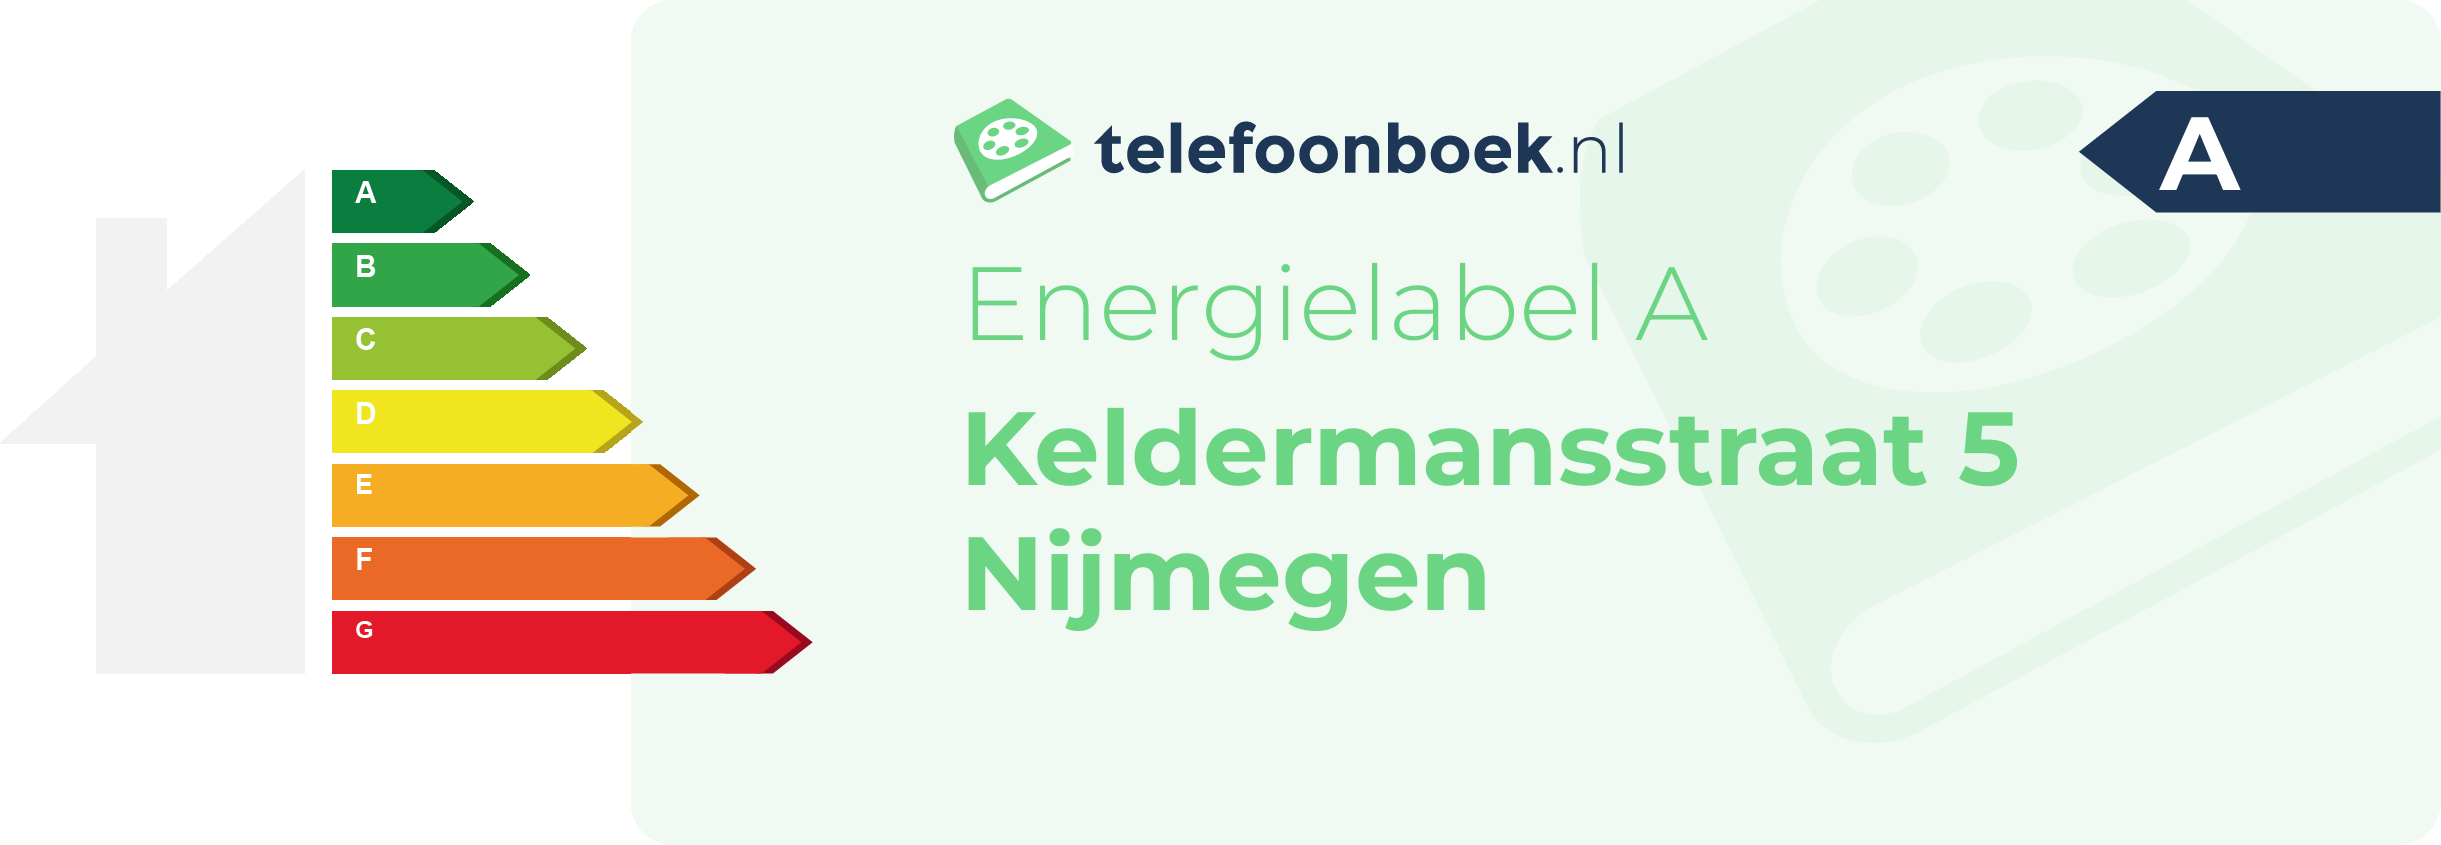 Energielabel Keldermansstraat 5 Nijmegen